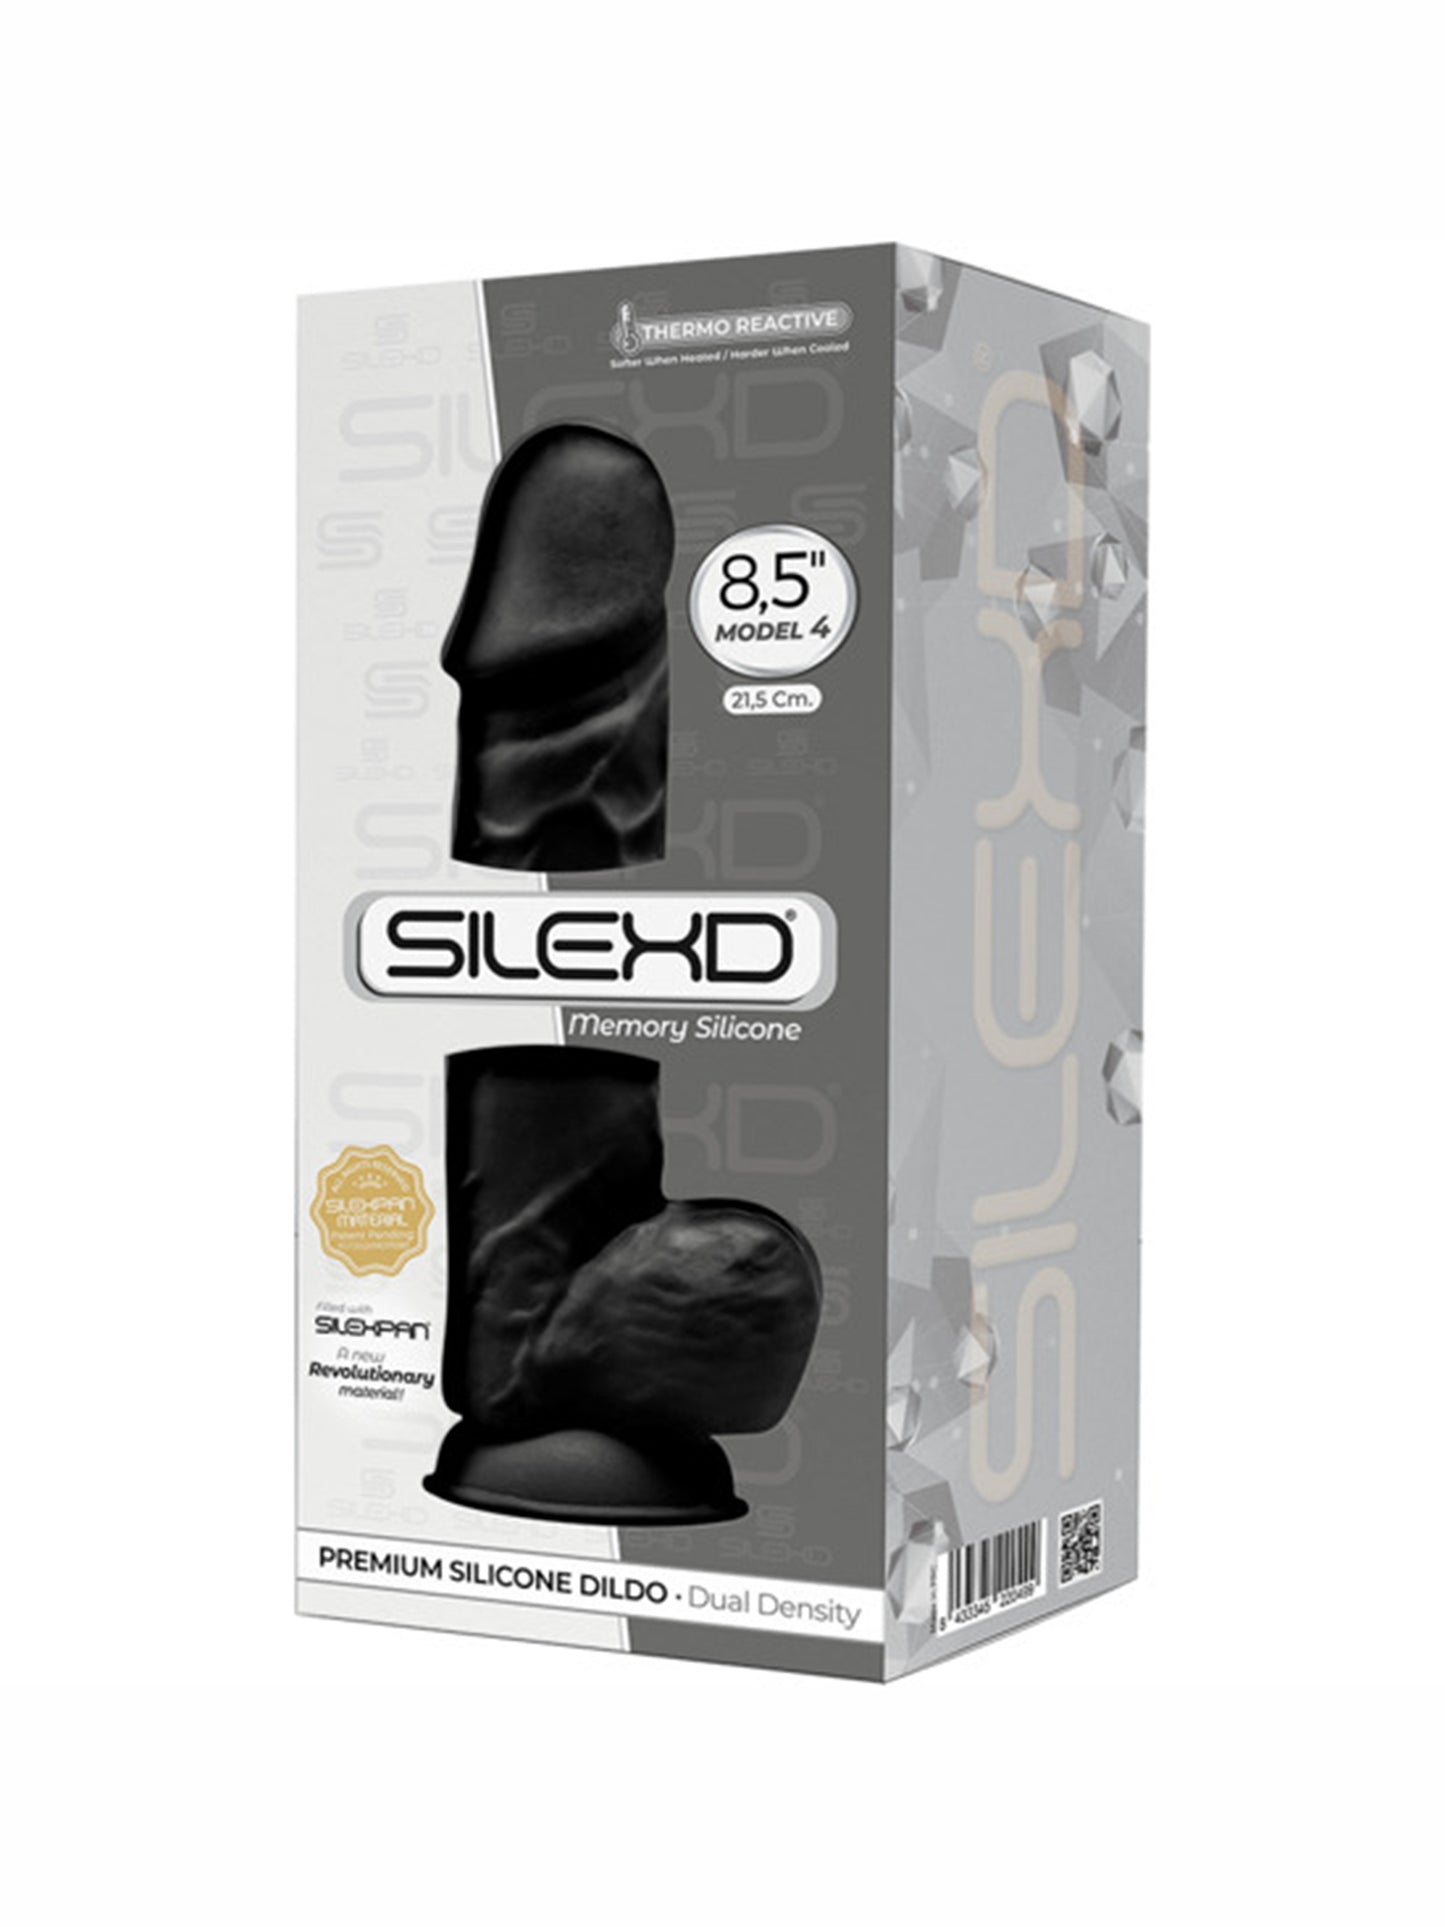 SILEXD - Dildo Double Density Realistic Dildo - Model 4 - 21,5 cm